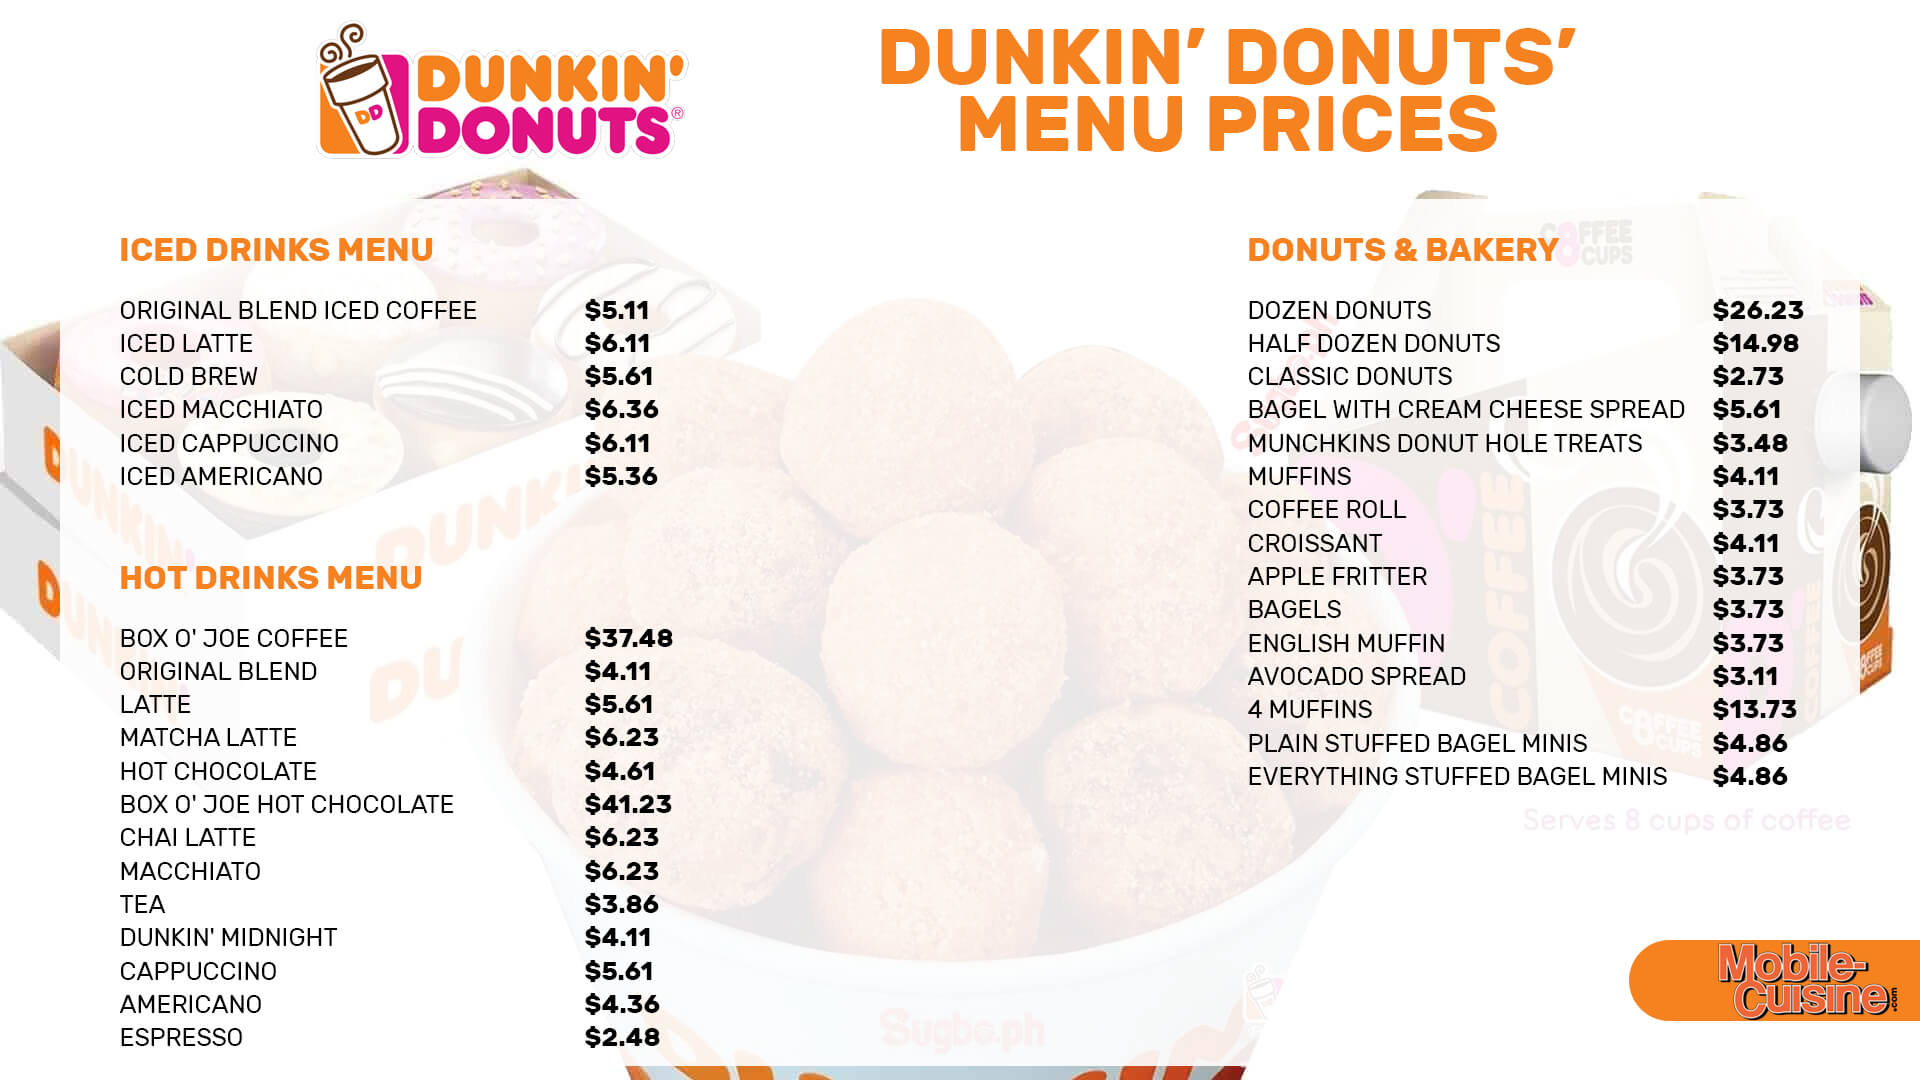 Dunkin’ Donuts menu prices